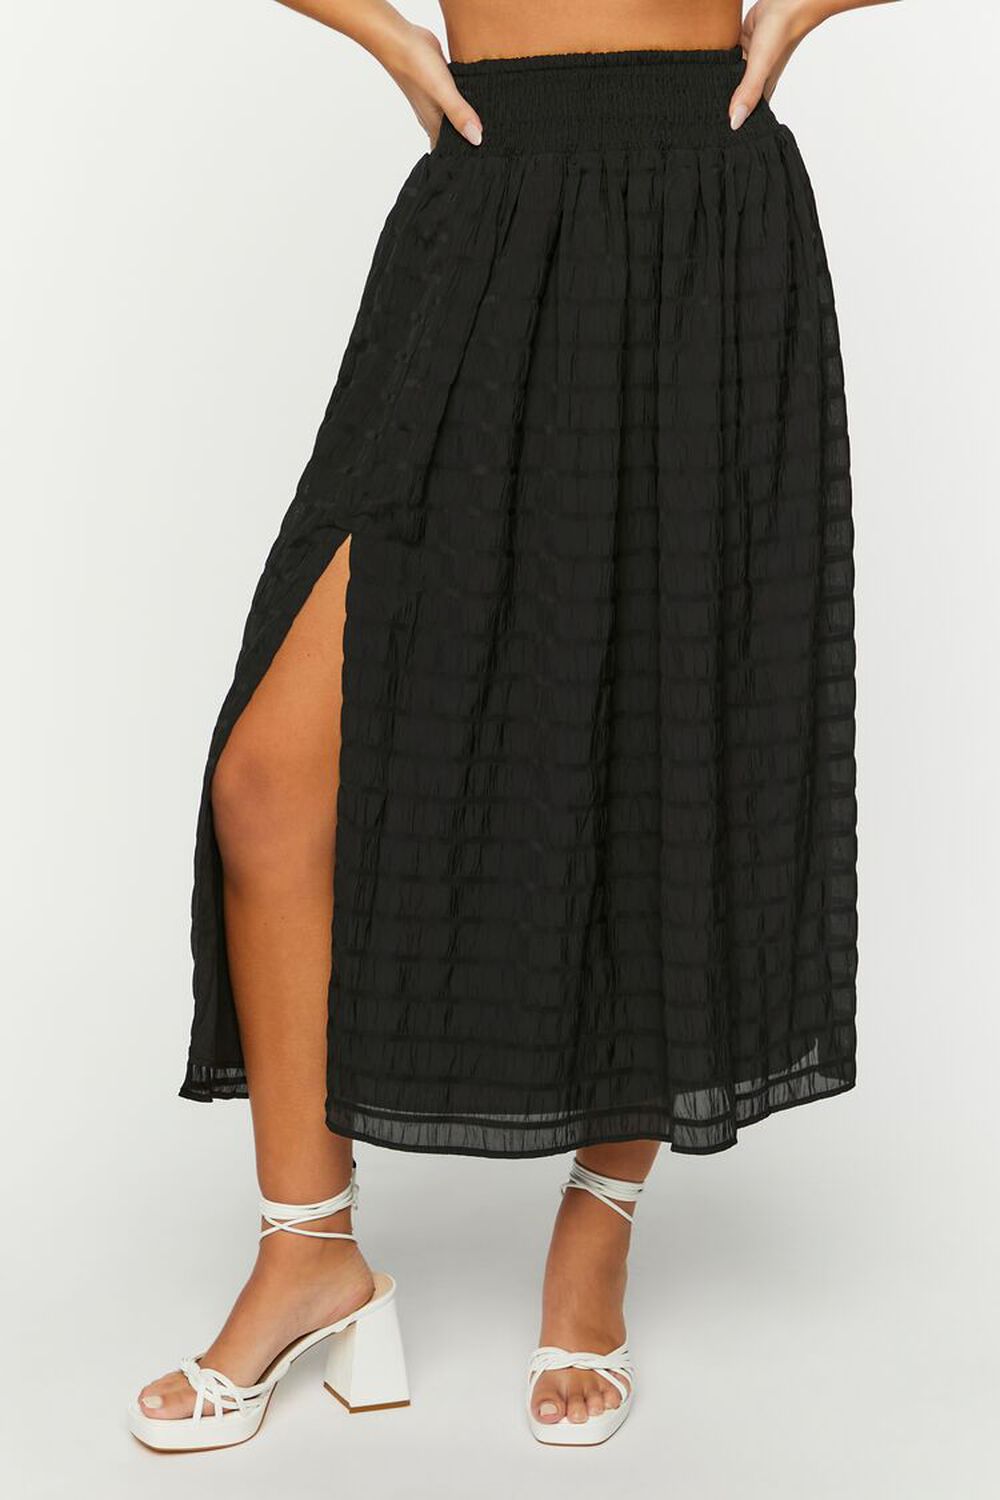 BLACK Side Slit Maxi Skirt, image 2